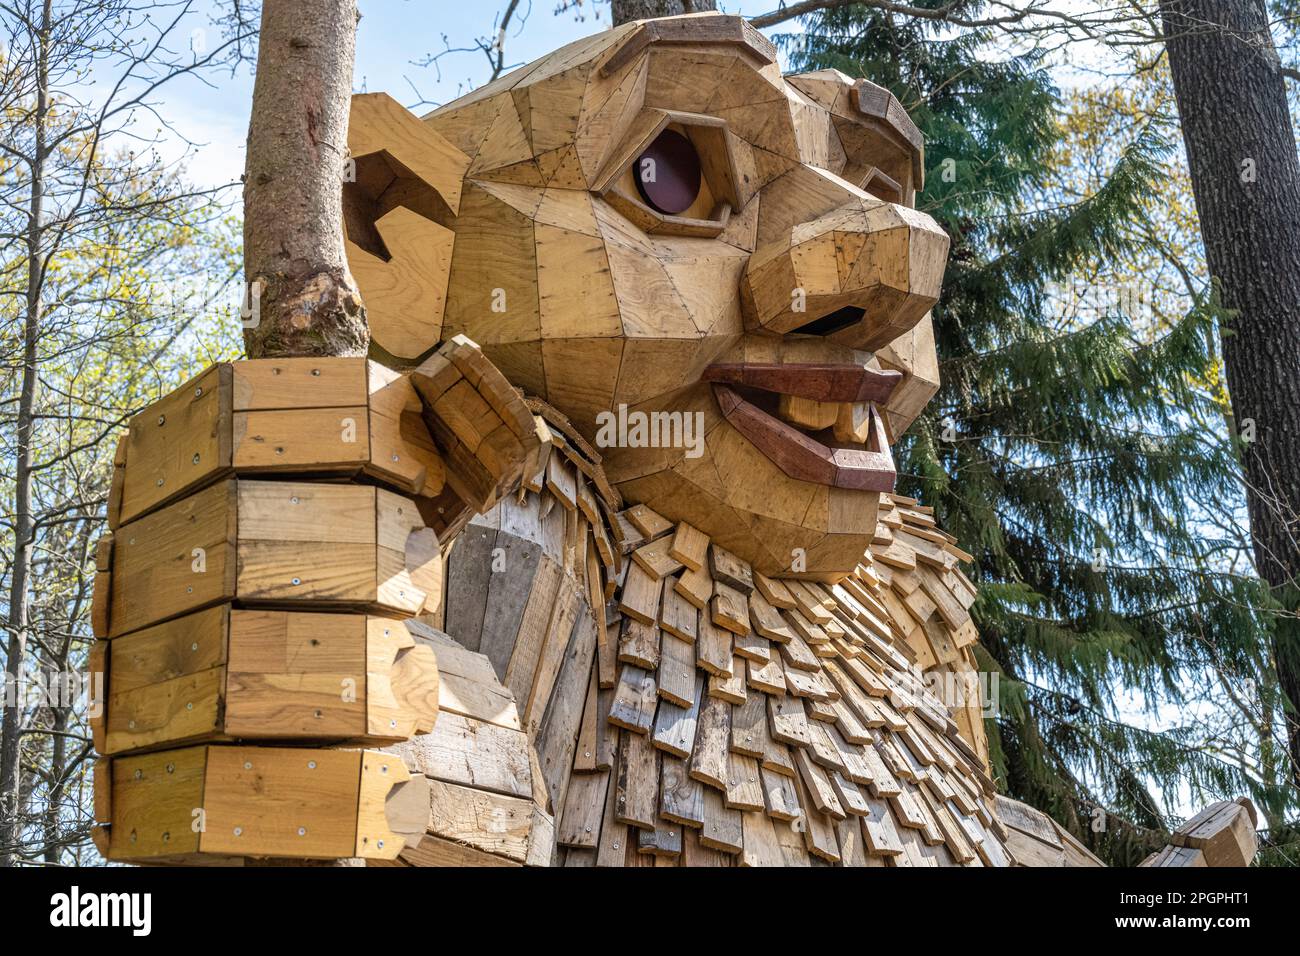 Ronja Redeye, a huge wooden troll sculpture by Danish artist Thomas Dambo, greets visitors to the Atlanta Botanical Garden in Atlanta, Georgia. (USA) Stock Photo